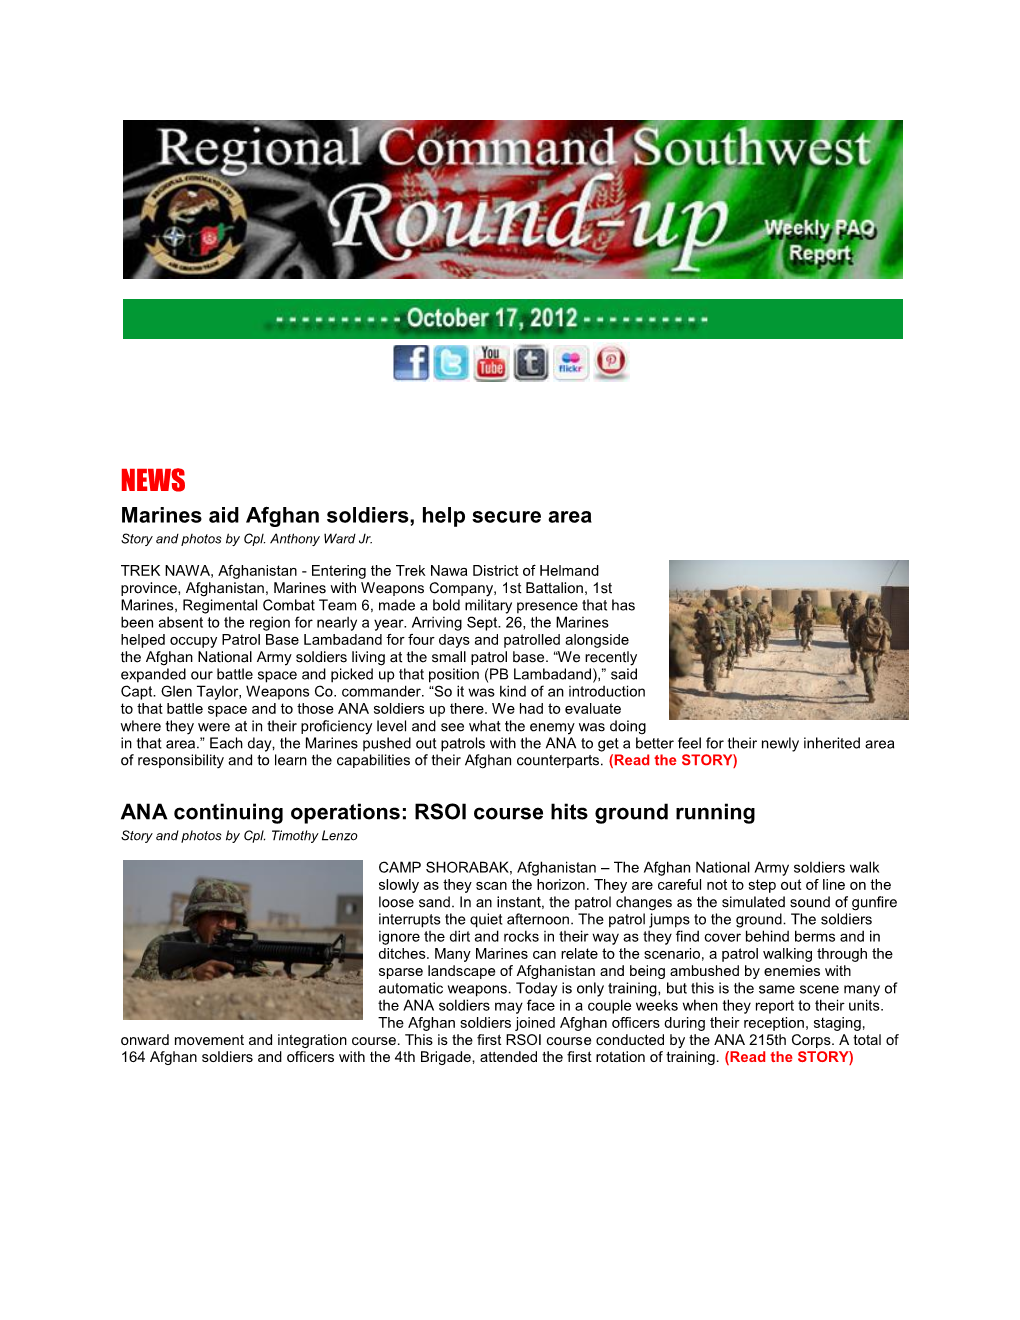 Marines Aid Afghan Soldiers, Help Secure Area ANA